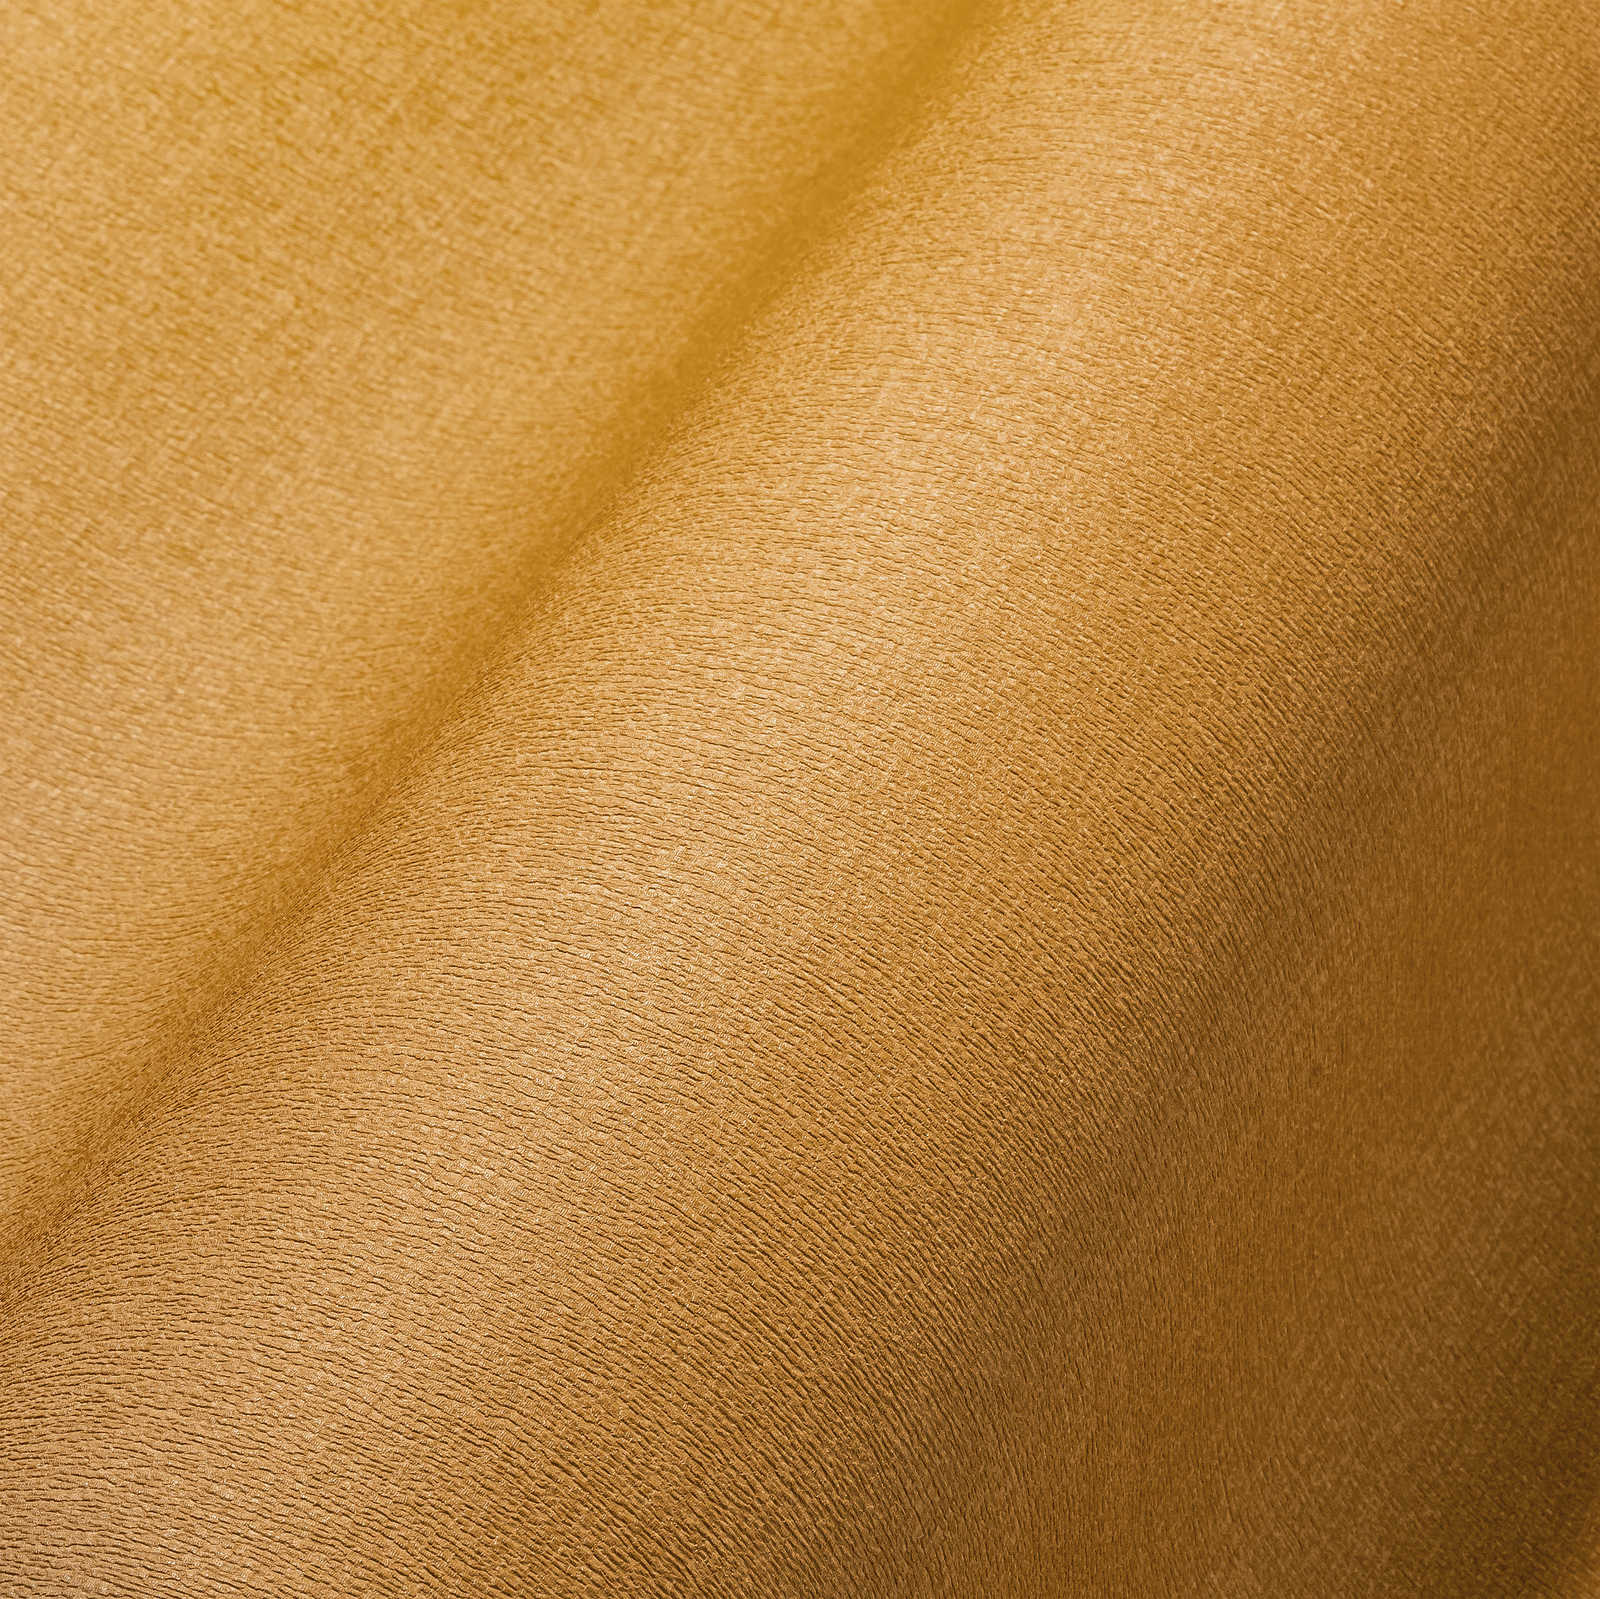             Plain non-woven wallpaper in bold colours - yellow
        